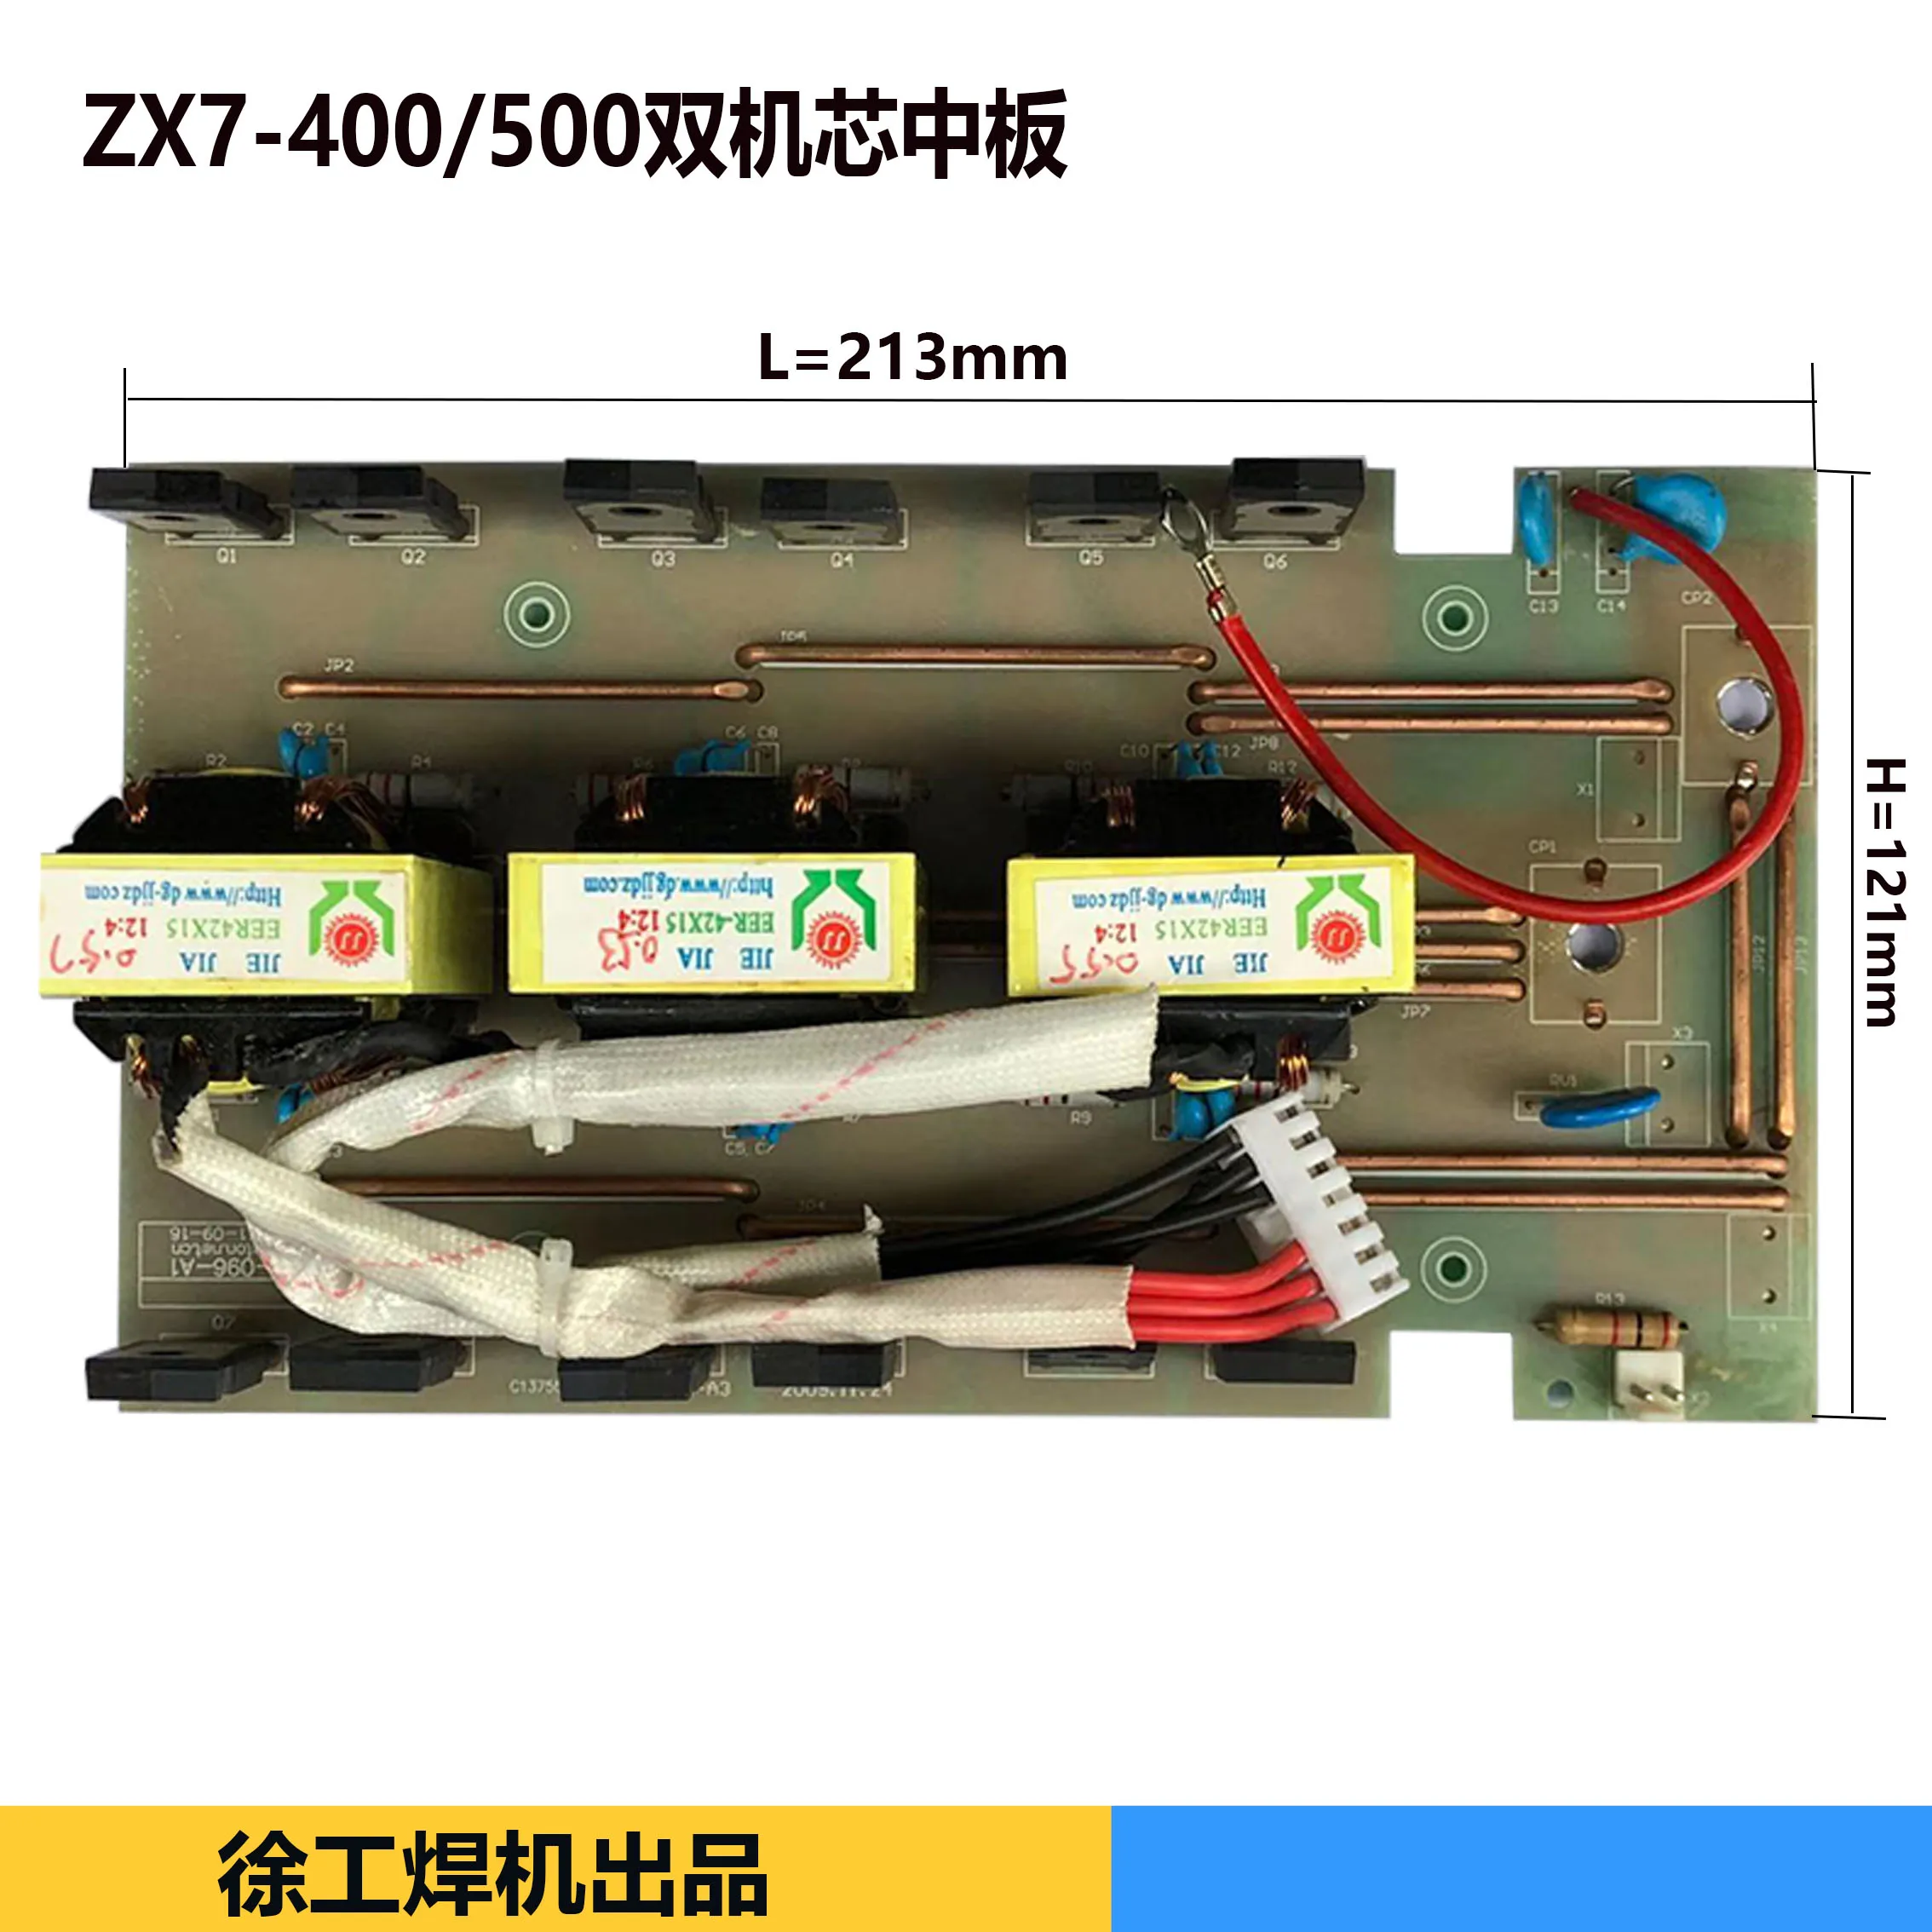 ruijia-zx7-400-500-double-calibre-mid-layer-plate-rectifier-transformer-dual-calibre-380v-universal-board